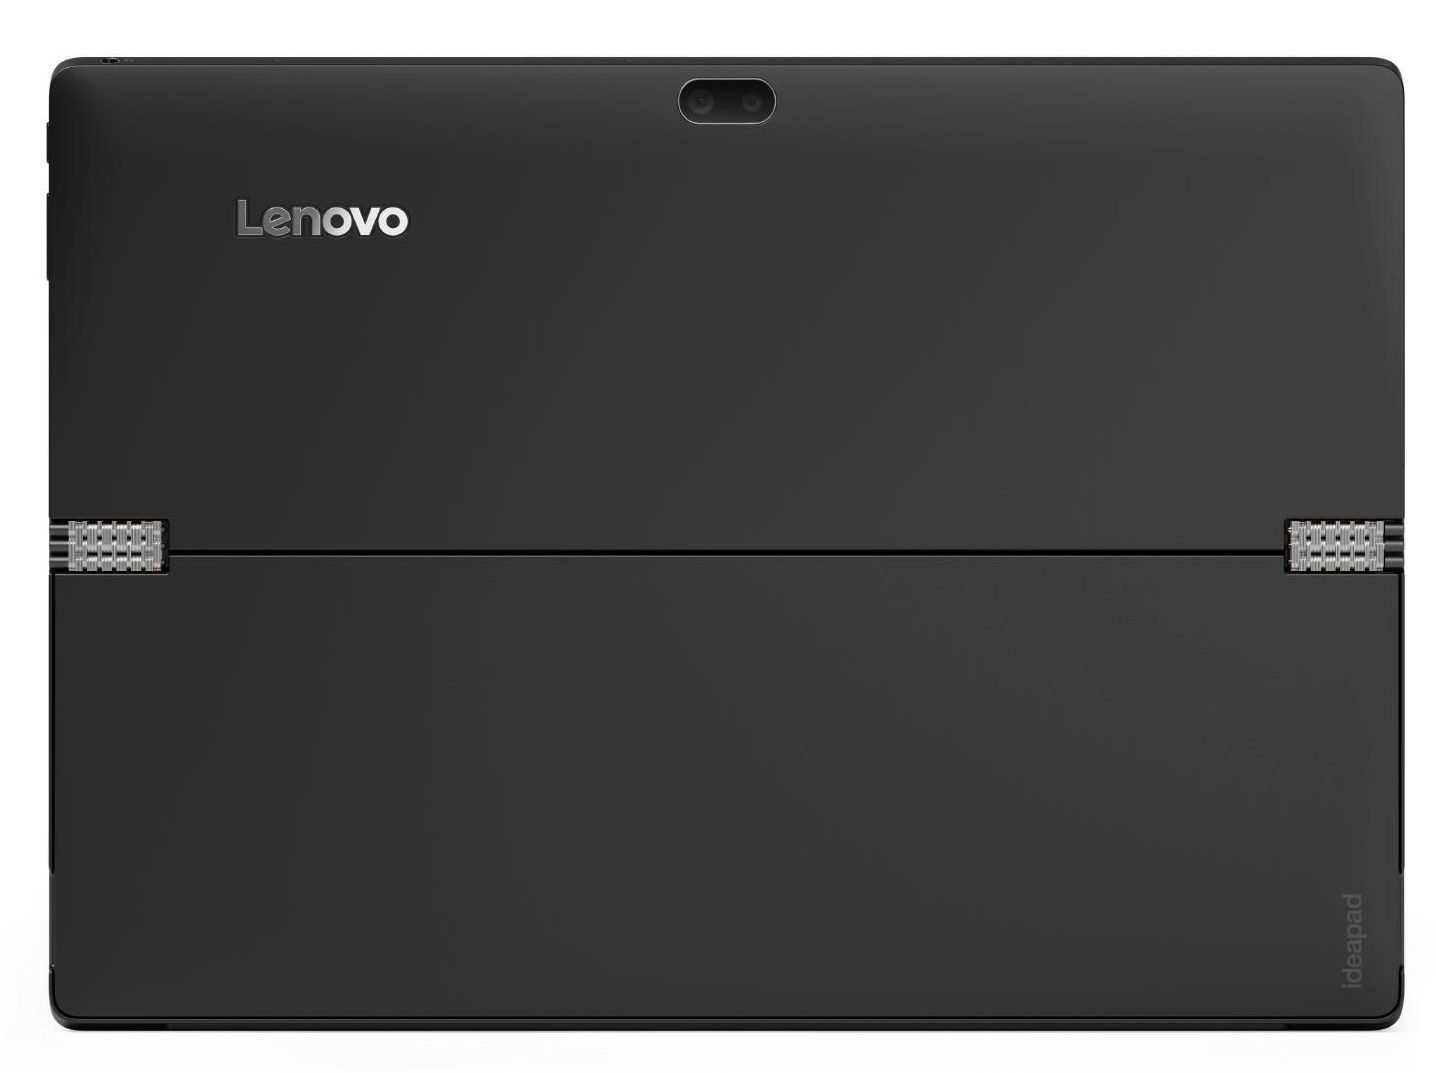 Lenovo IdeaPad Miix 700 Convertible Review - NotebookCheck.net Reviews